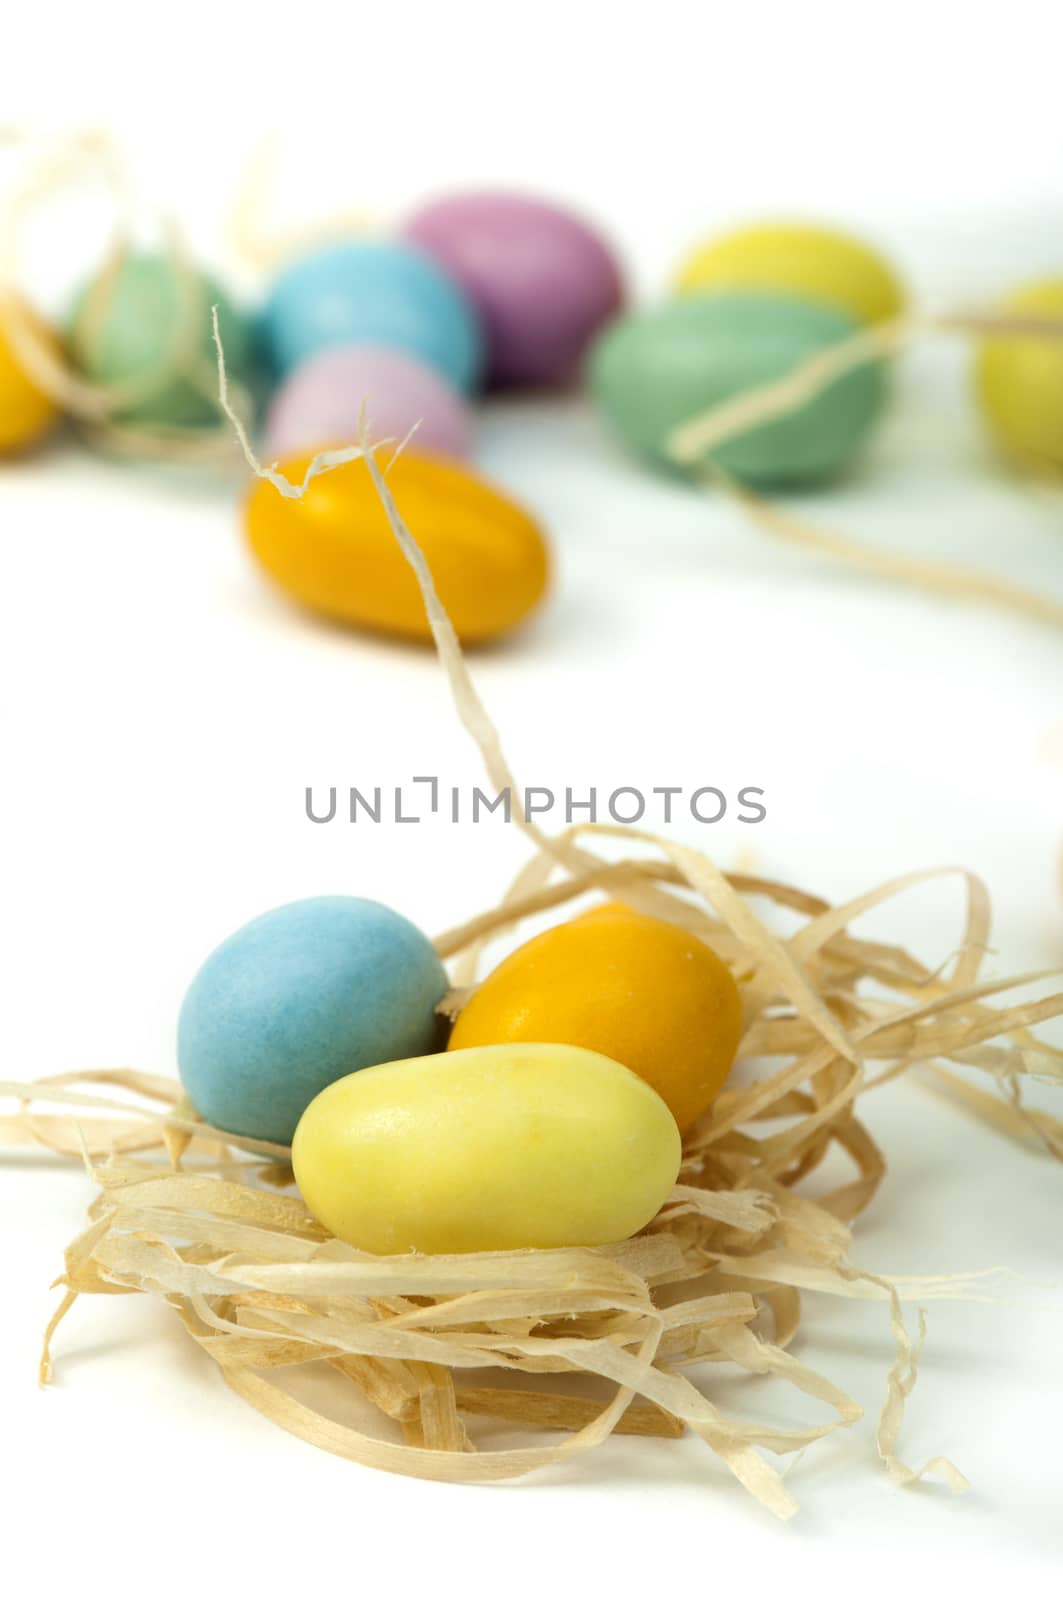 Small multicolored eggs white isolated